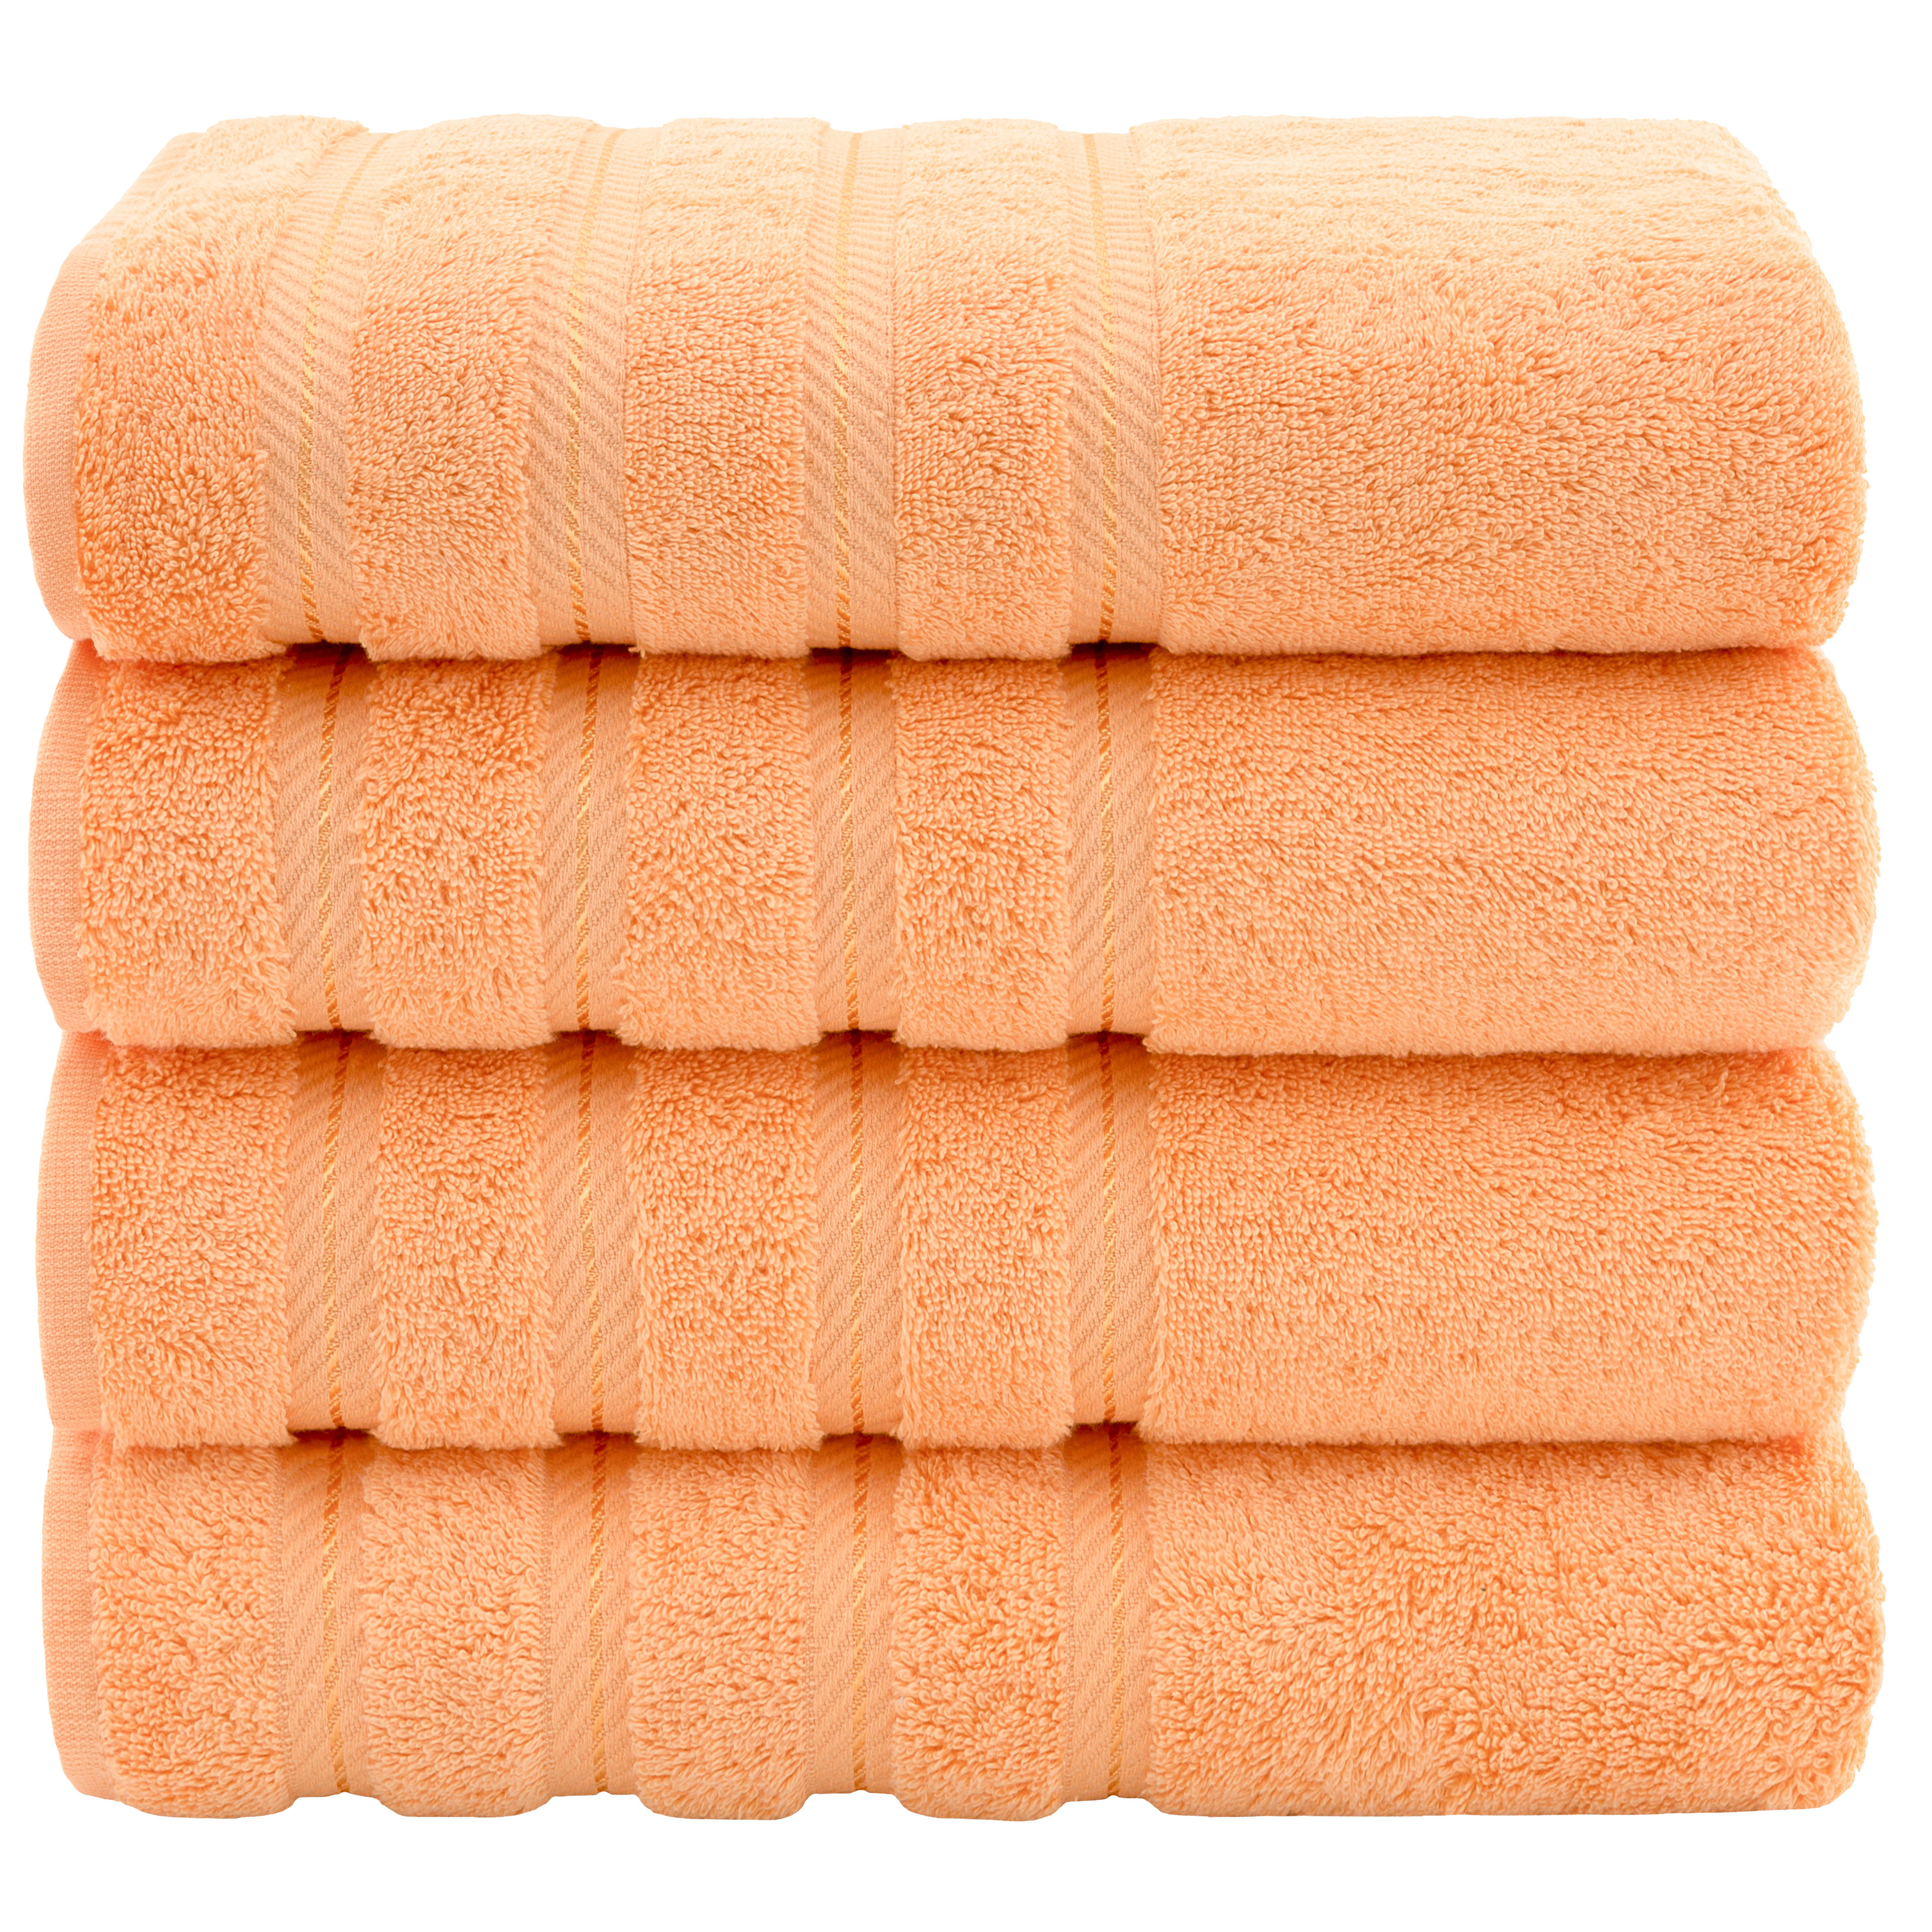 American Soft Linen Bath Sheet 40x80 inch 100% Cotton Extra Large Oversized Bath Towel Sheet - Malibu Peach, Size: Oversized Bath Sheet 40x80, Orange